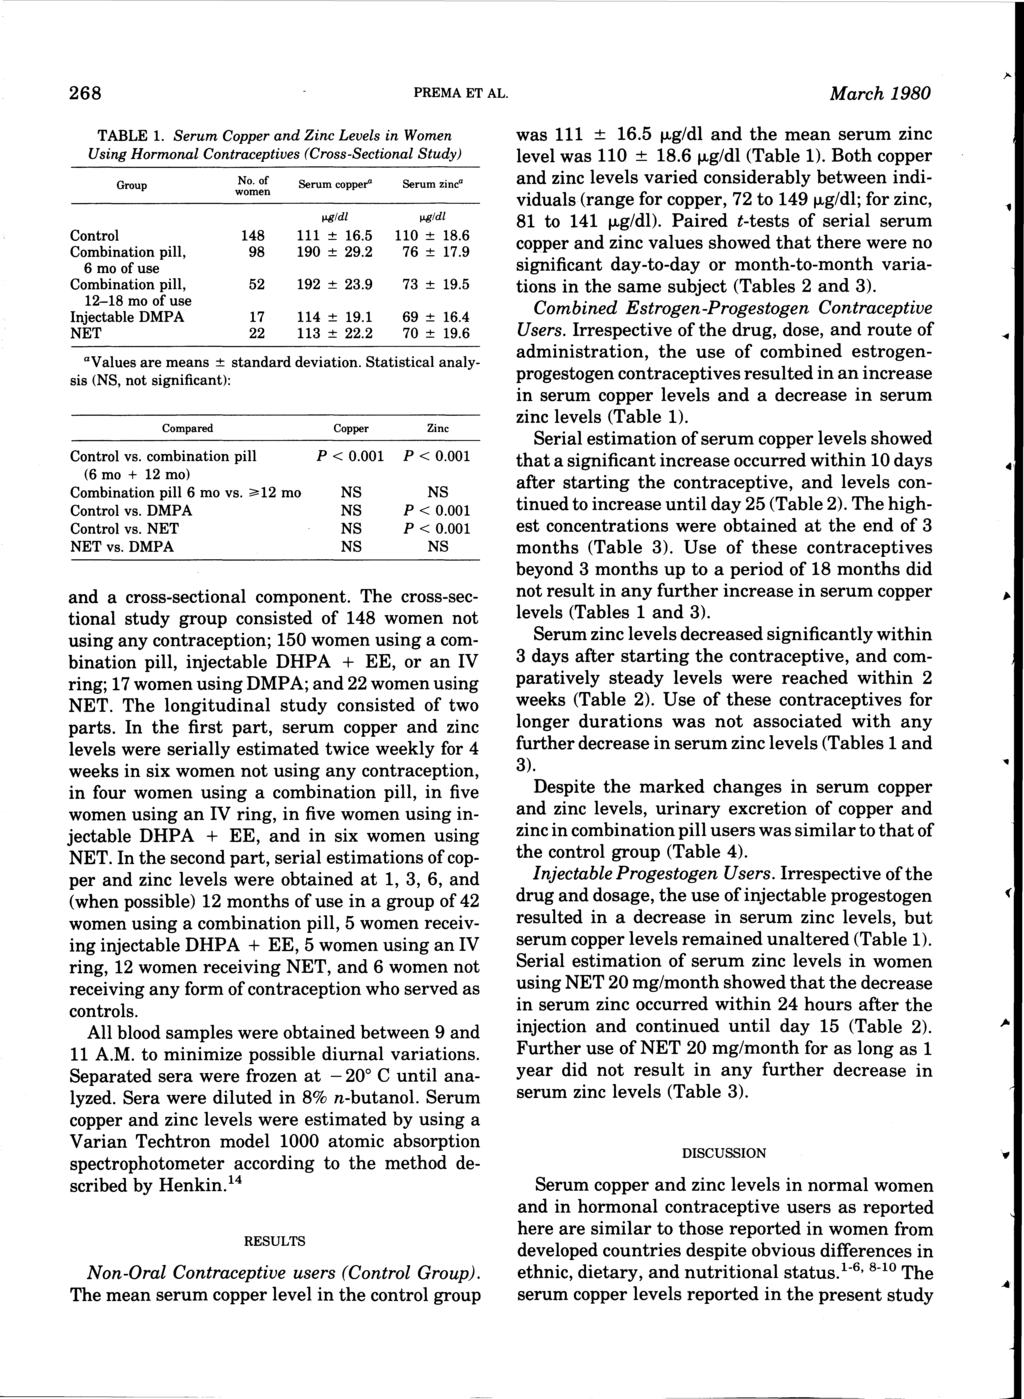 268 PREMAETAL. TABLE l. Serum and Levels in Wmen Using Hrmnal Cntraceptives (Crss-Sectinal Study) Grup N. f Serum cpper" Serum zinca wmen WIldl WJldl Cntrl 148 111 ± 16.5 110 ± 18.